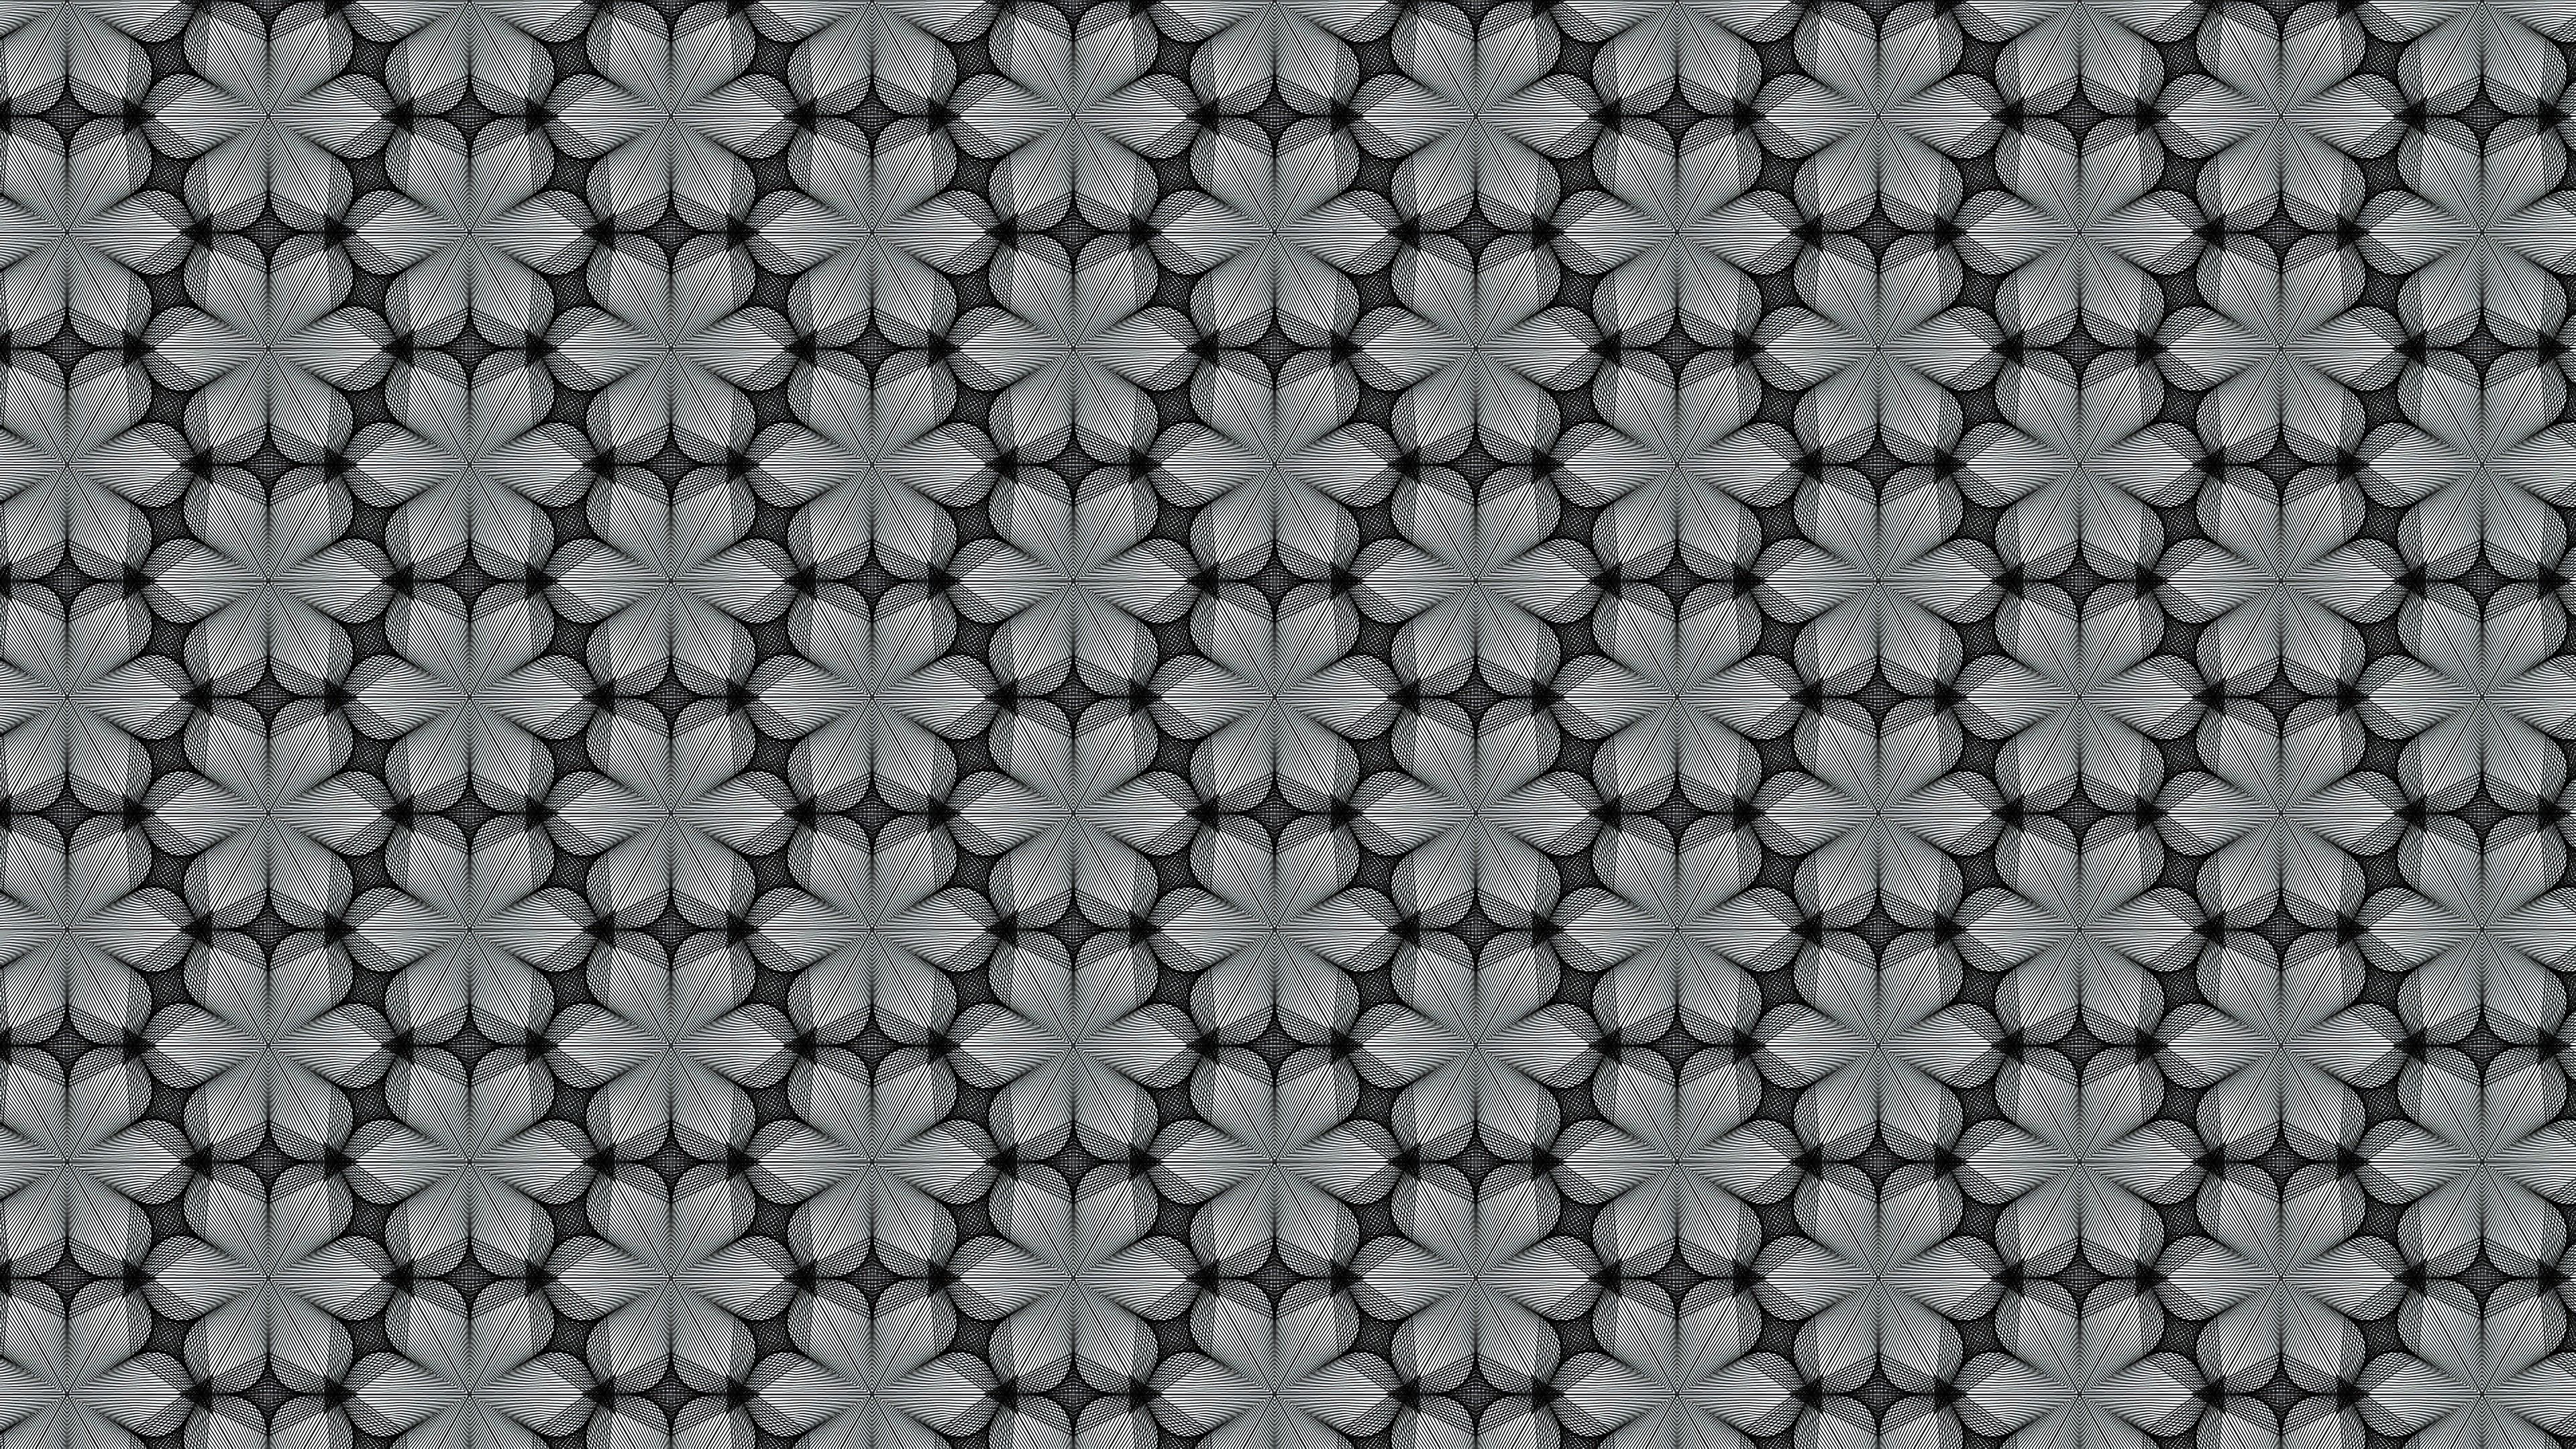 Handy-Wallpaper Muster, Textur, Texturen, Bw, Chb, Symmetrie kostenlos herunterladen.